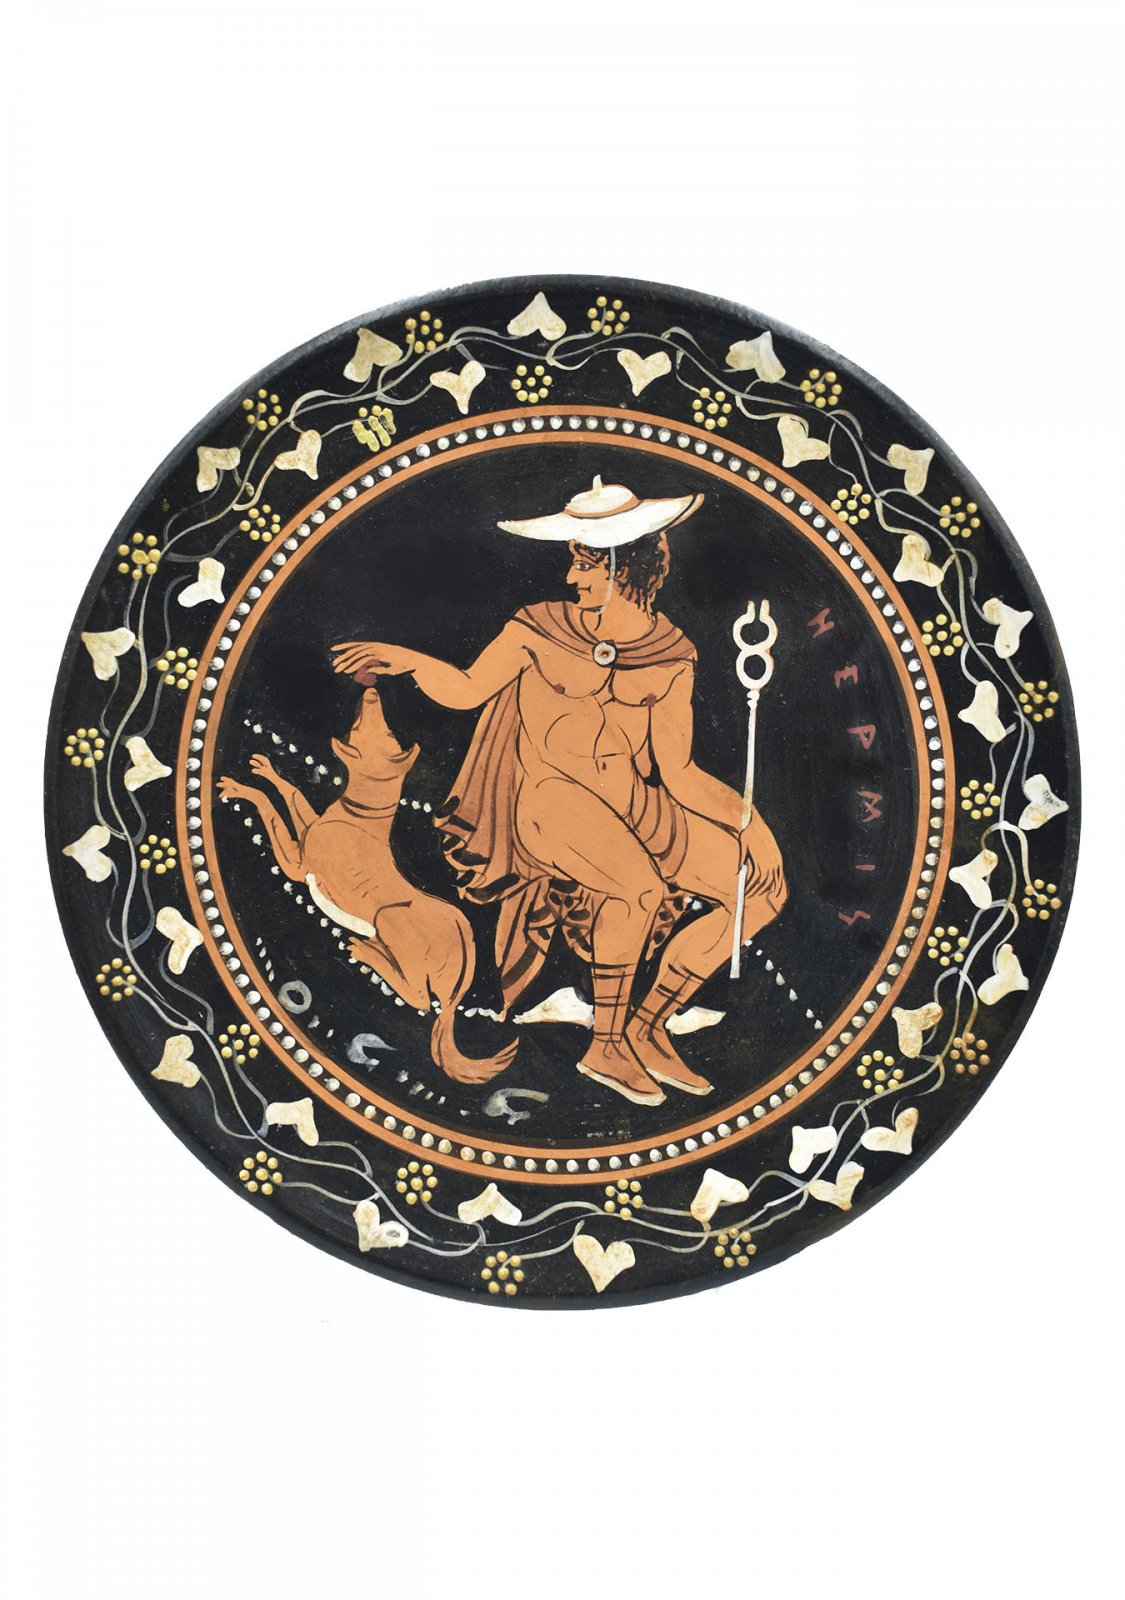 Greek ceramic plate depicting Hermes